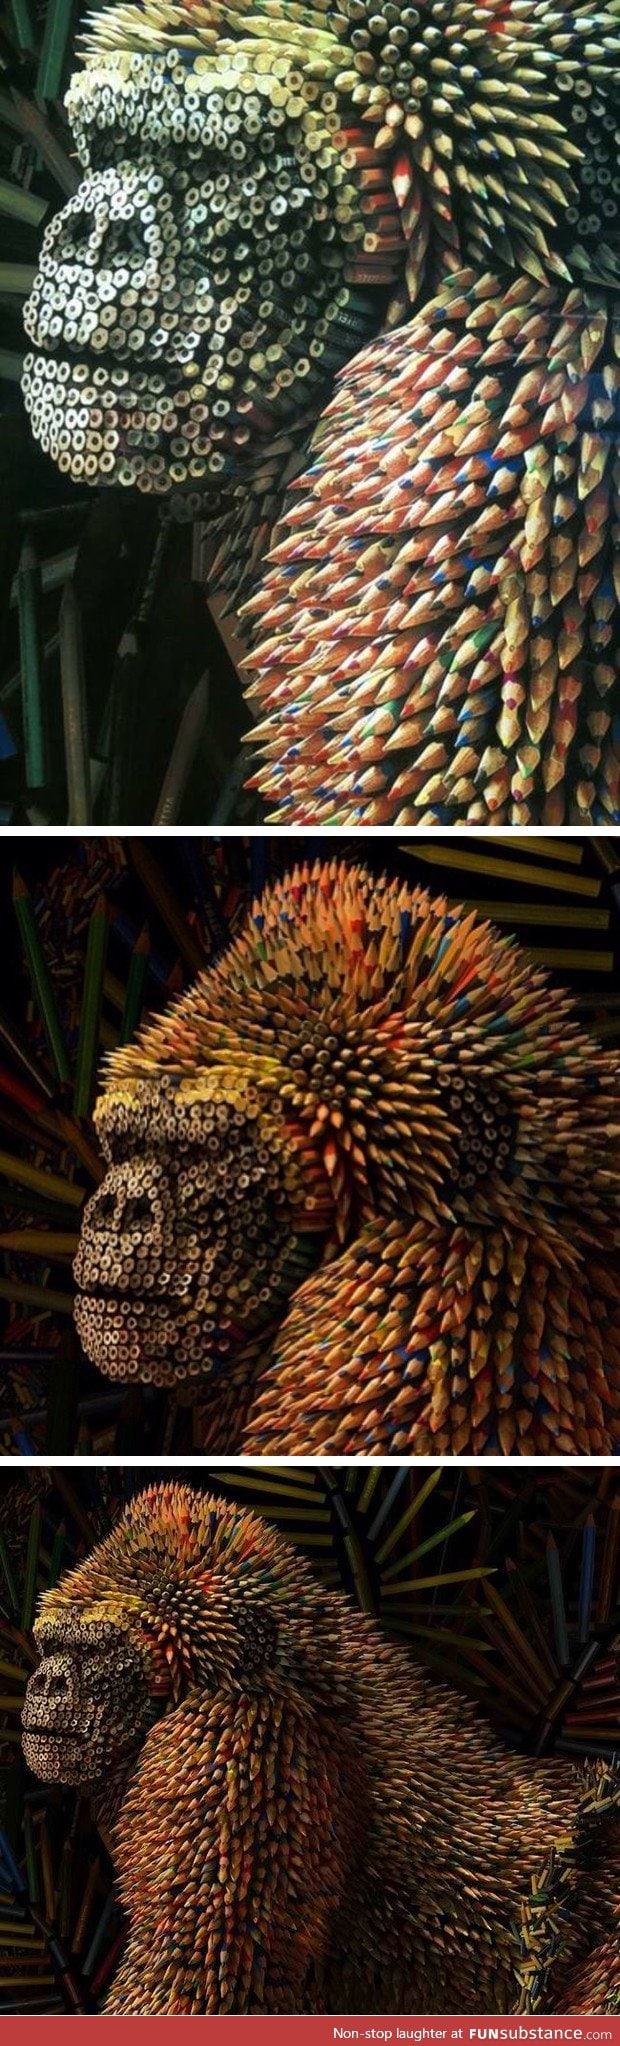 Gorilla made of colored pencils